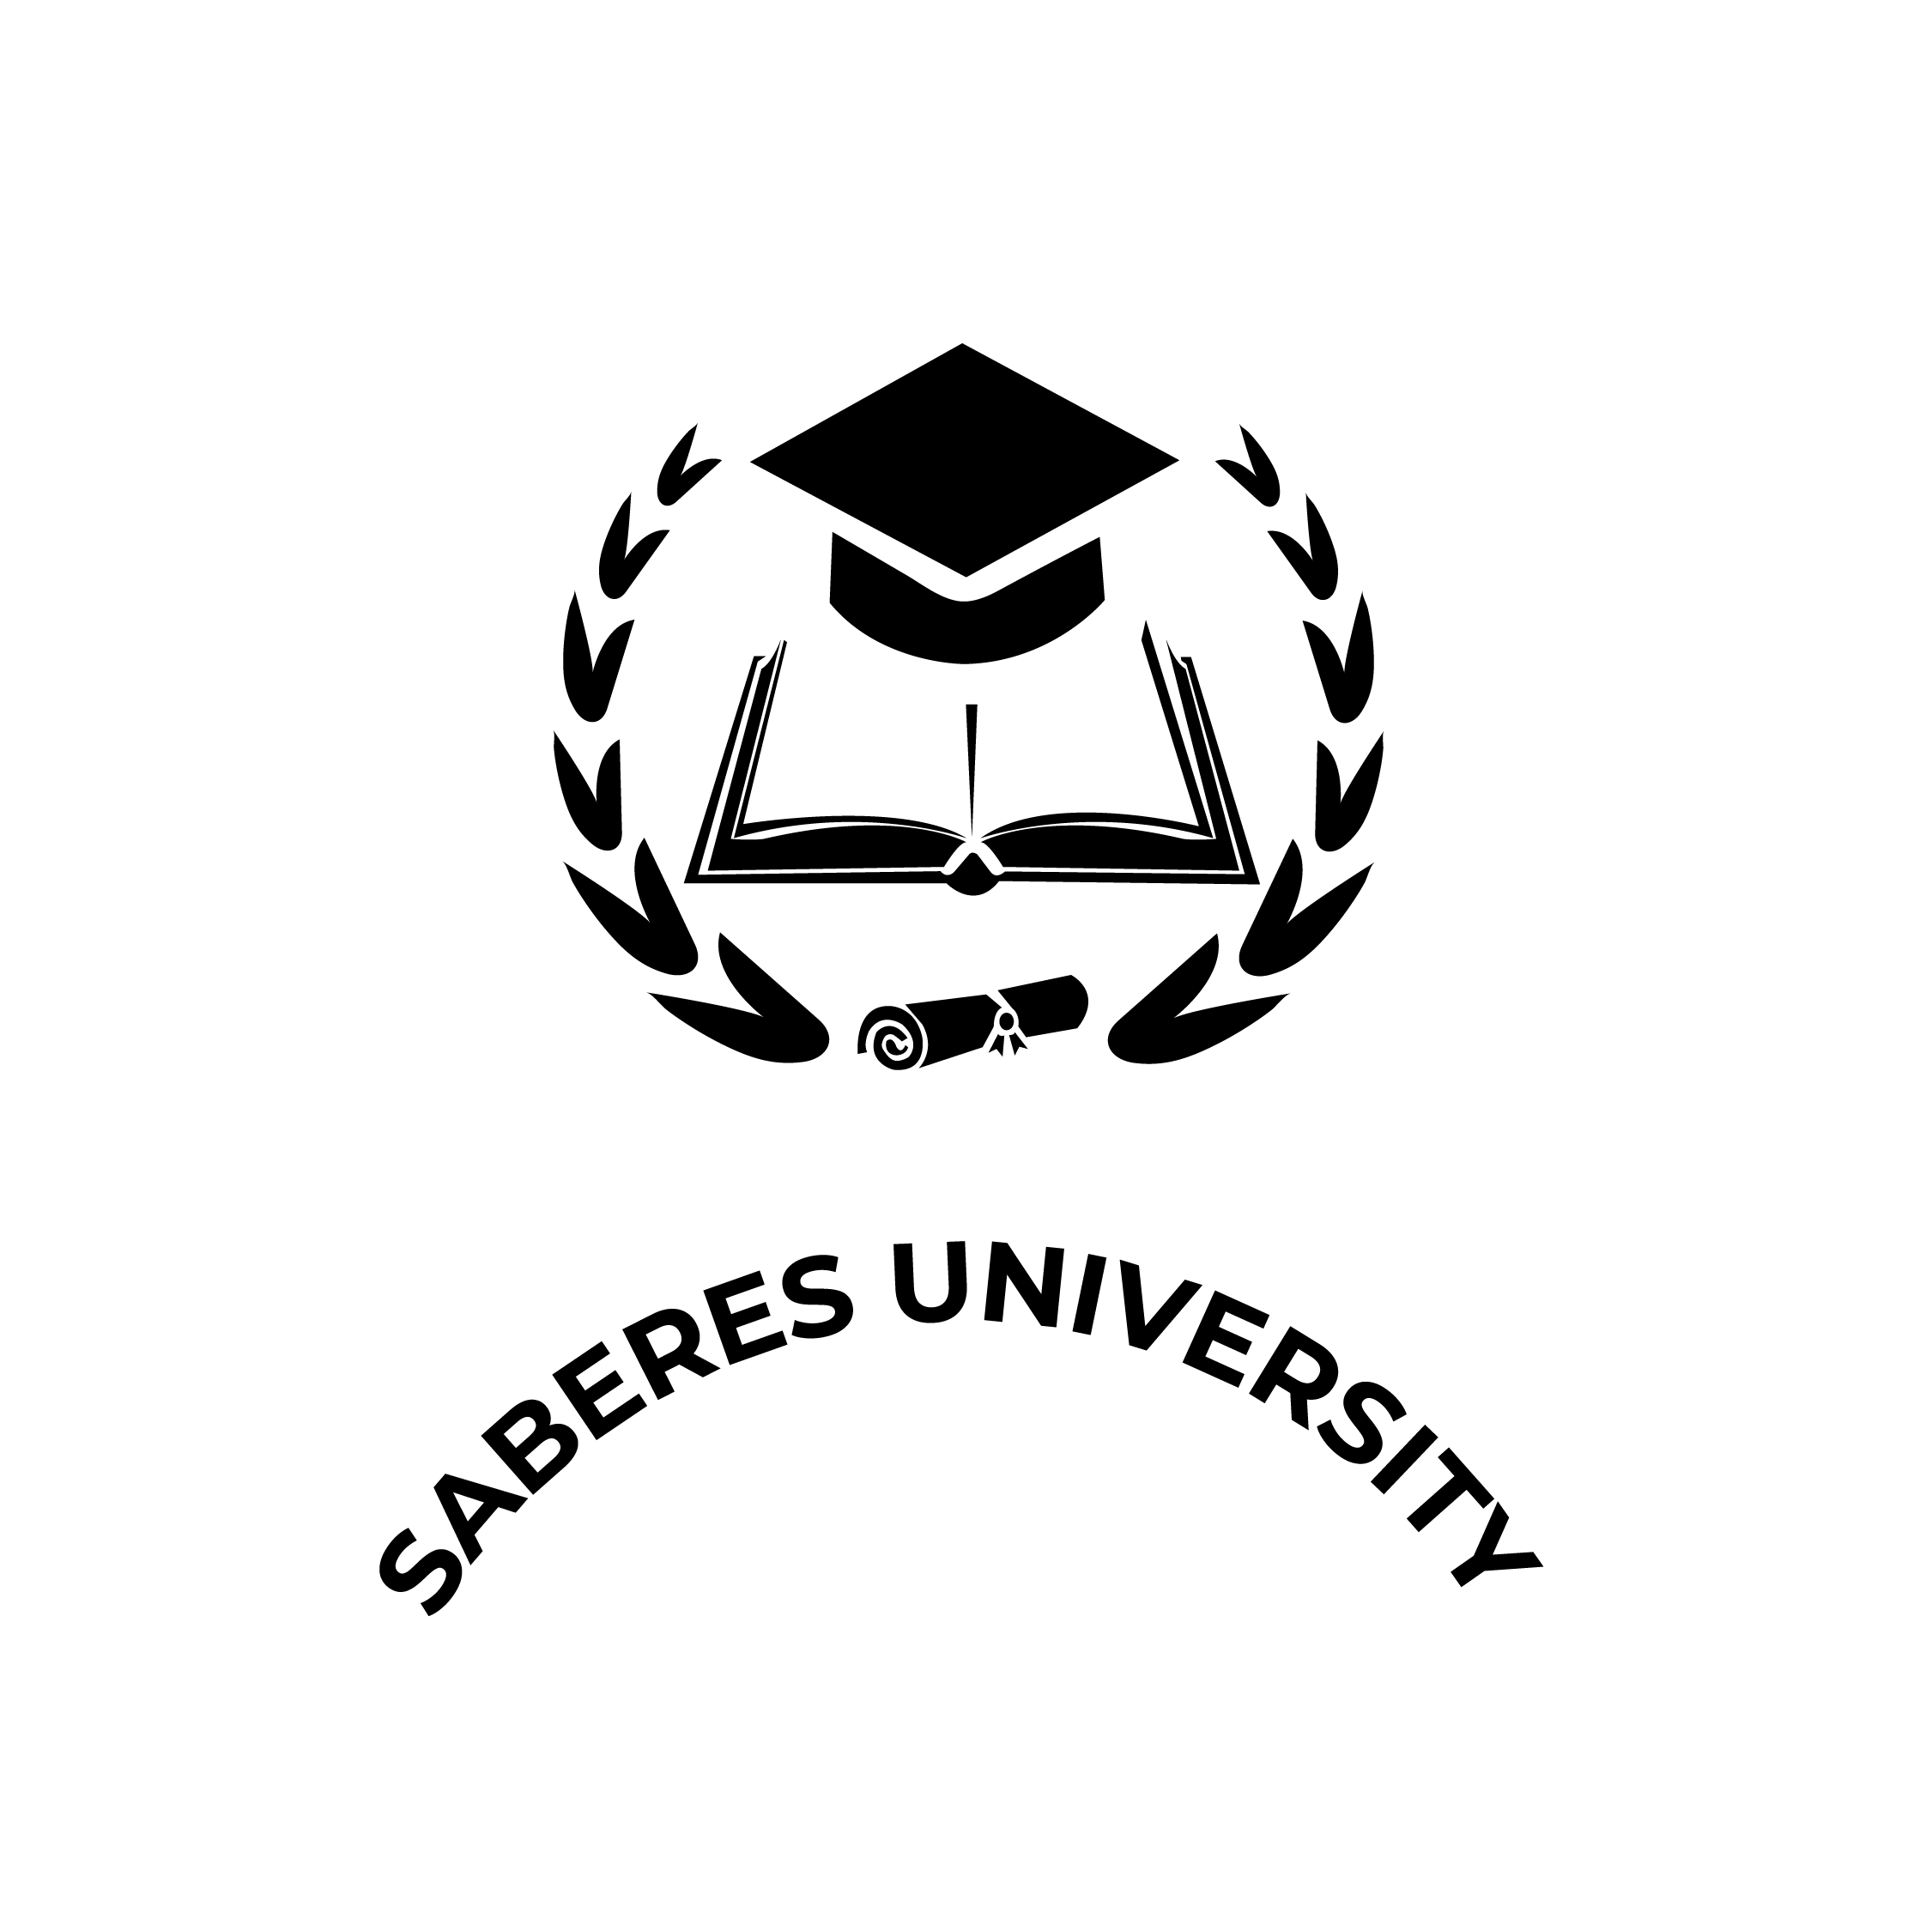 Saberes University